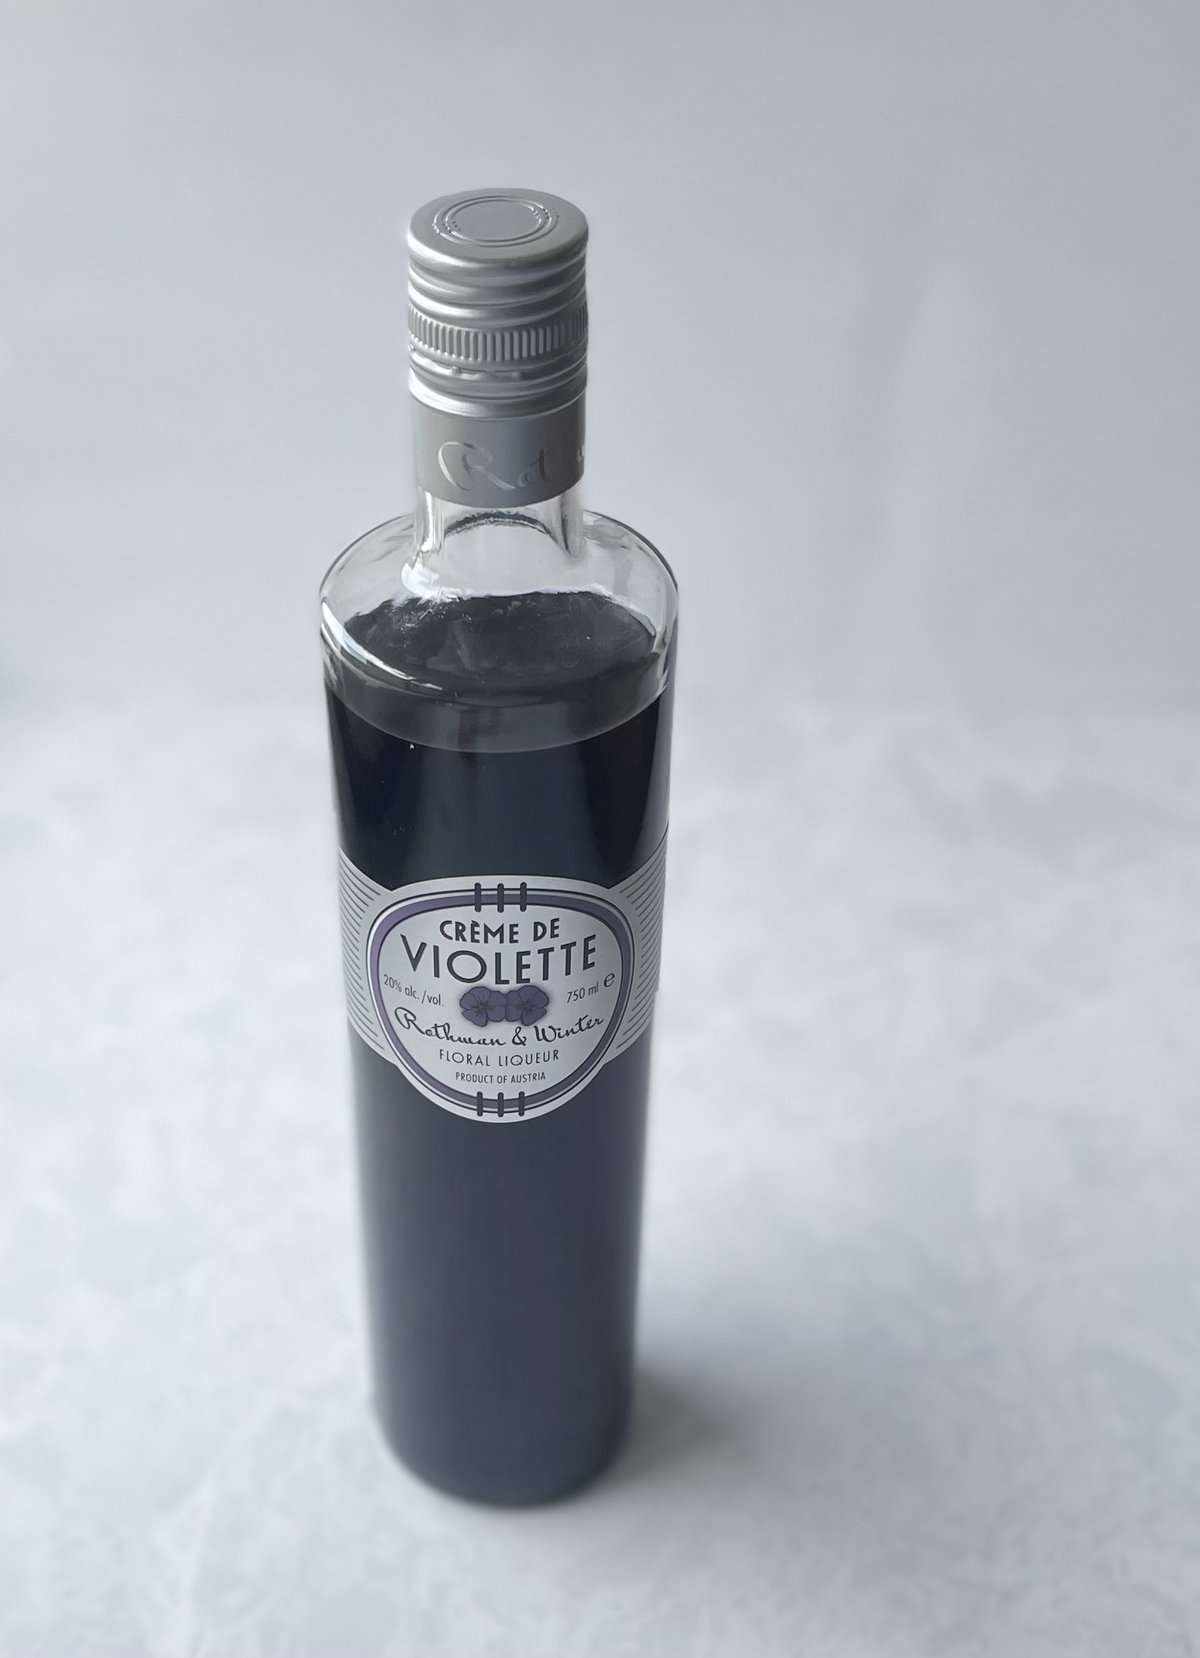 bottle of creme de violette on a white countertop.